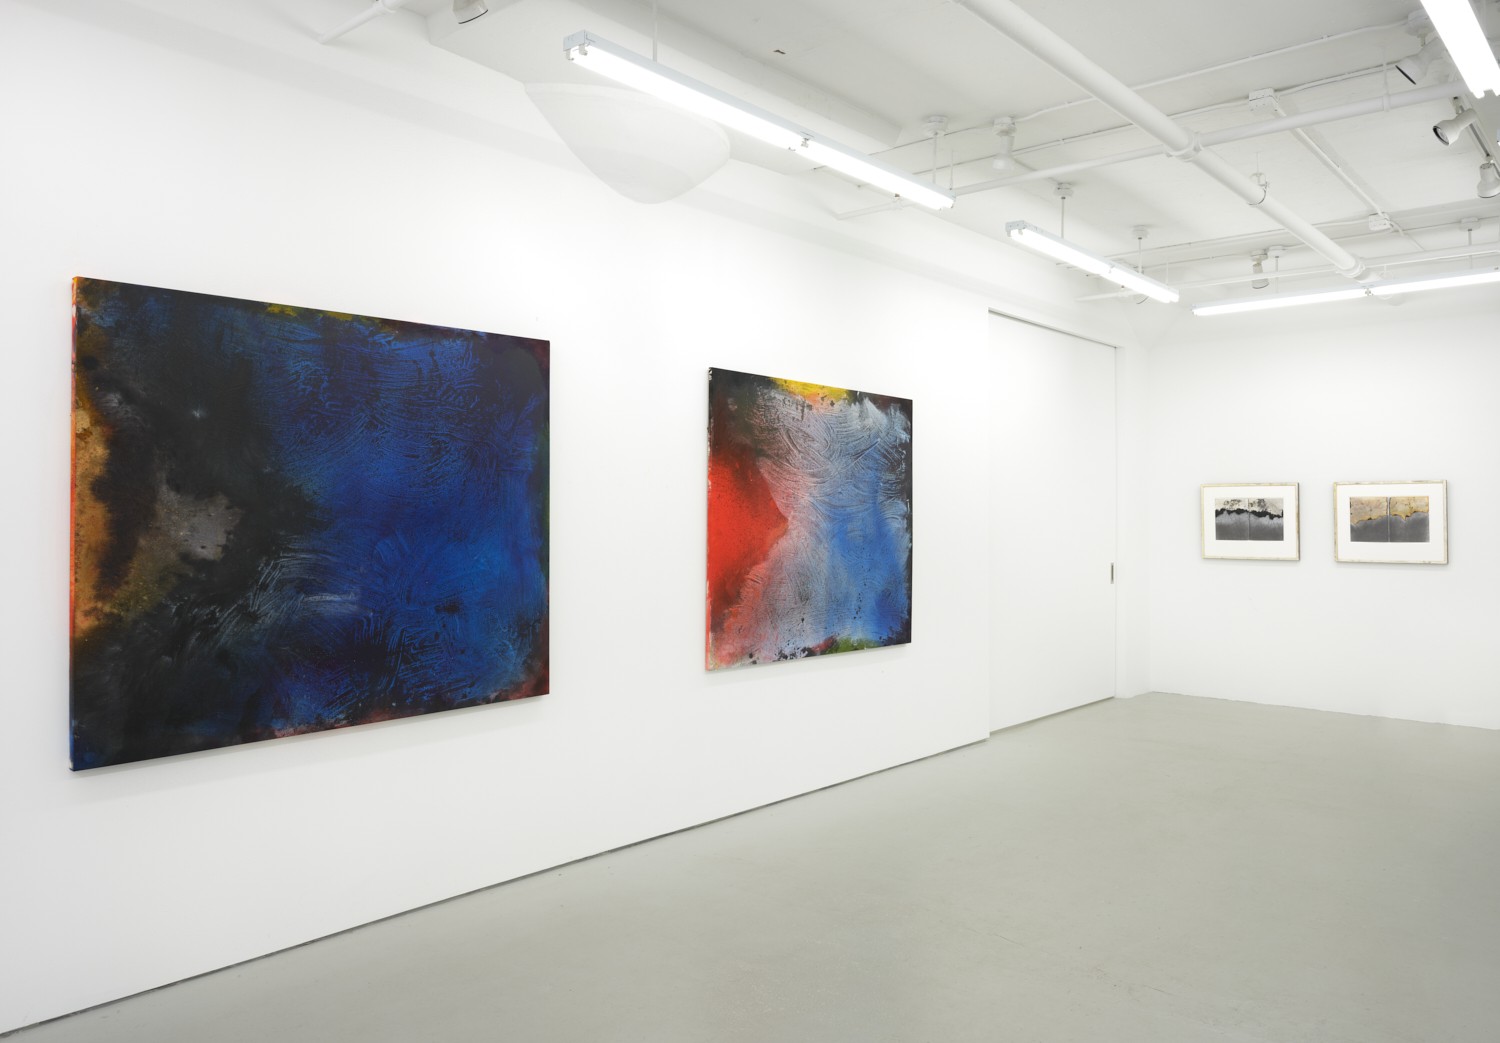 Installation image for Ben Woolfitt: Blue Passage, at David Richard Gallery